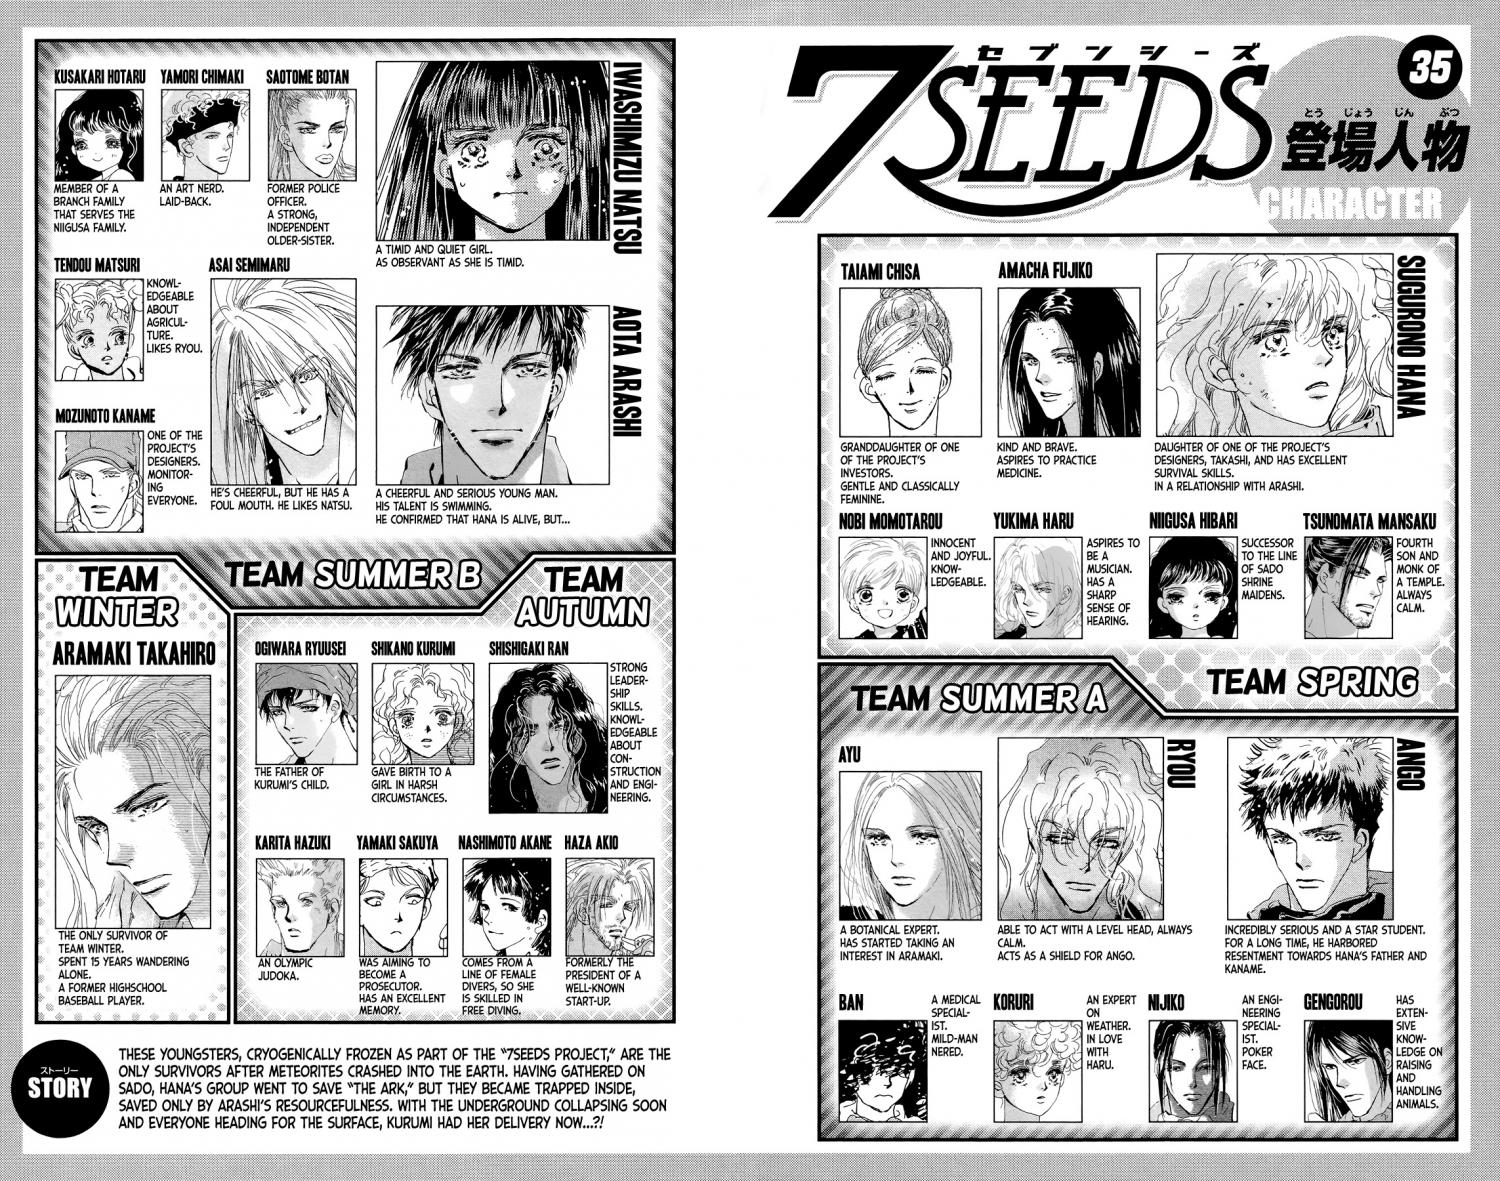 7 Seeds - episode 178 - 3